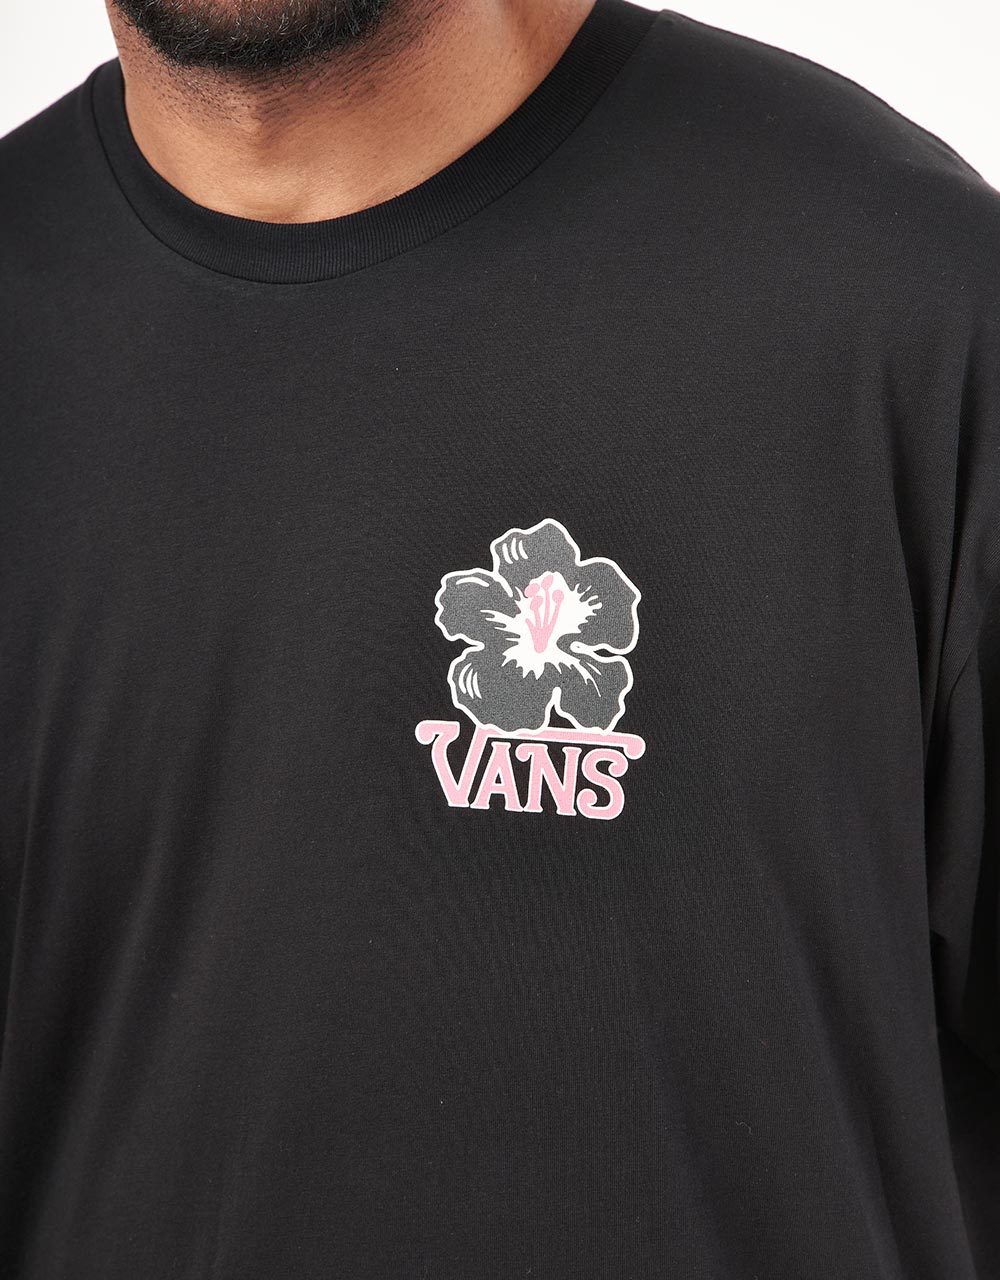 Vans All Day T-Shirt - Black